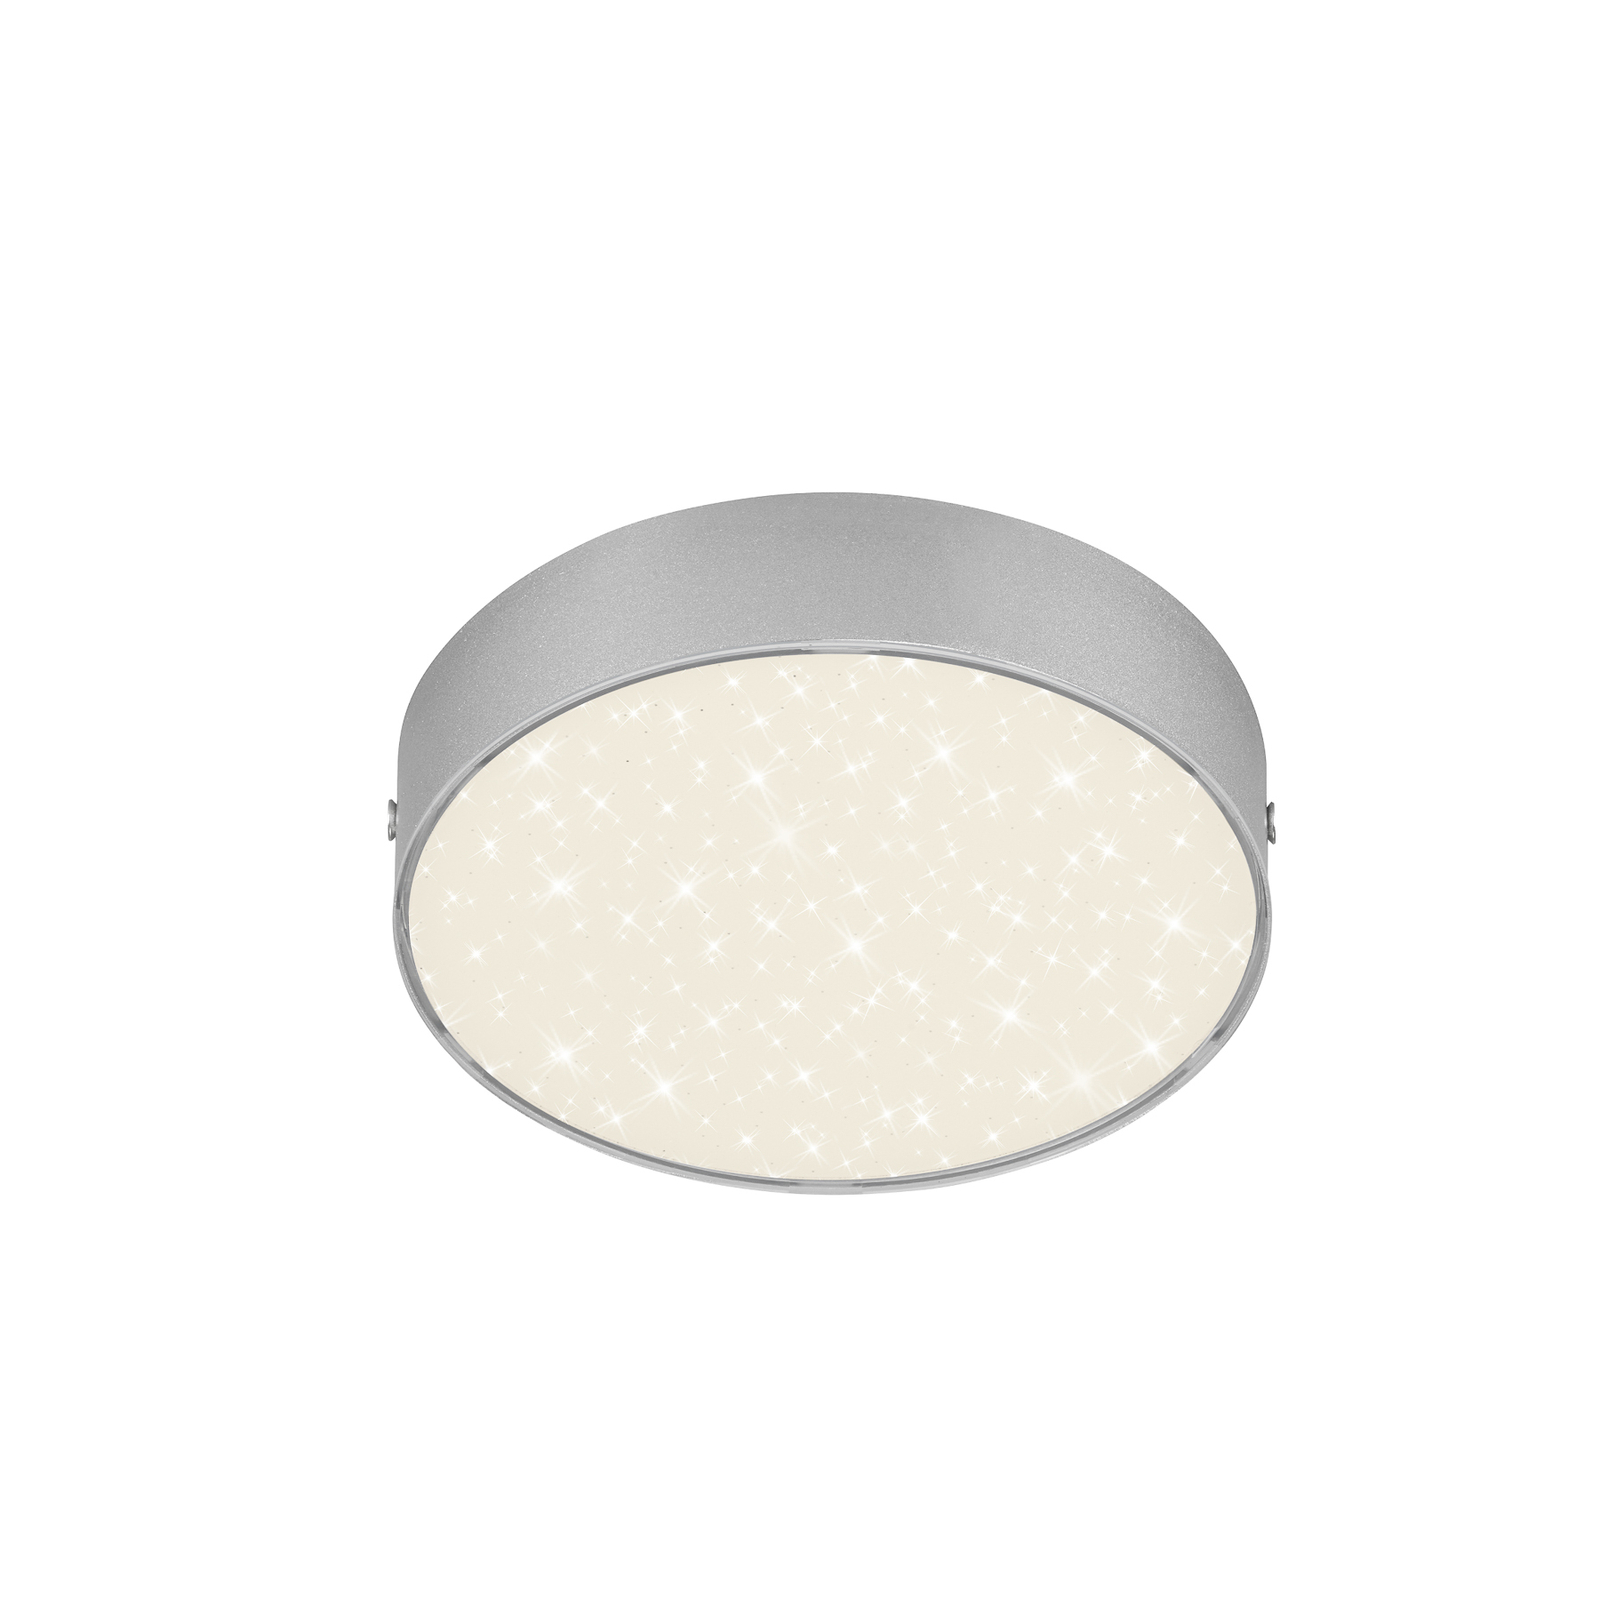 LED plafondlamp Flame Star, Ø 15,7 cm, zilver